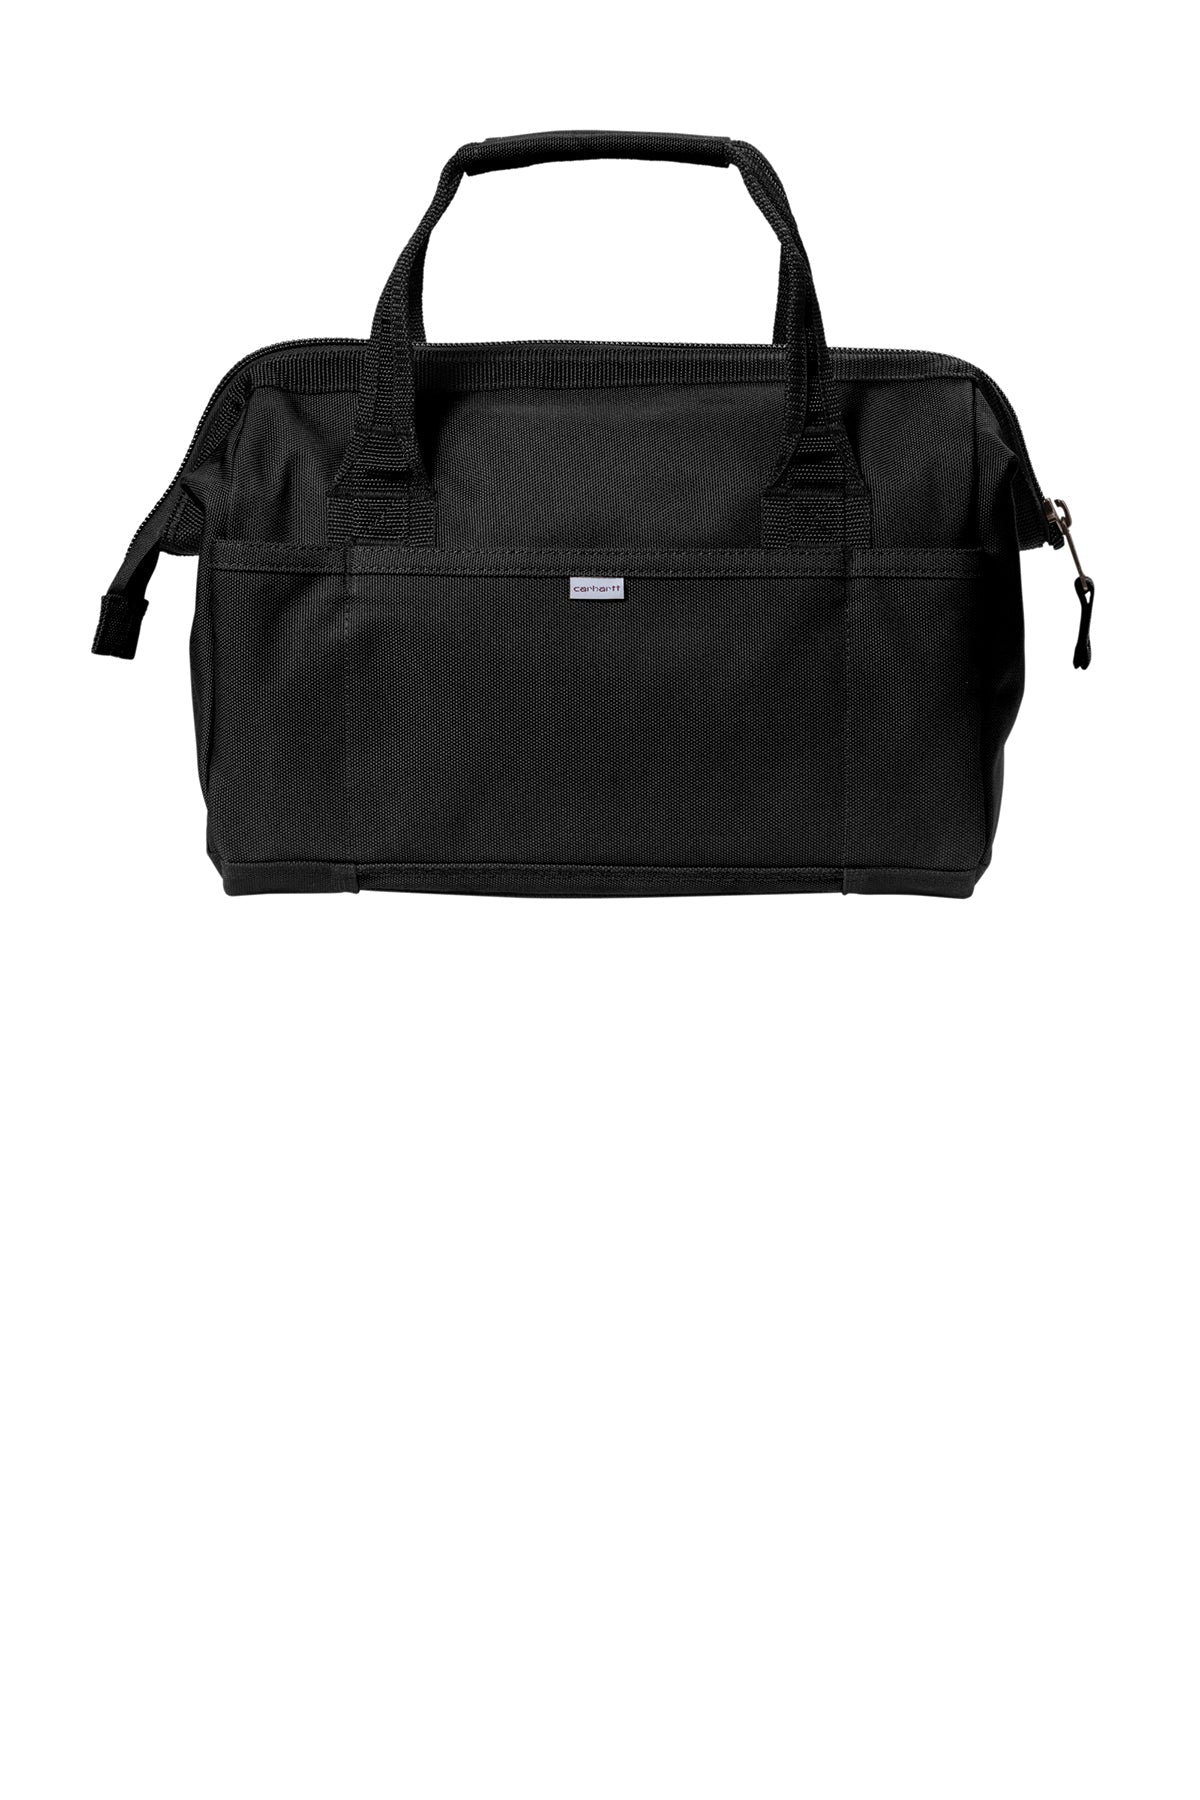 Carhartt Foundry Series 14 Customized Tool Bags, Black